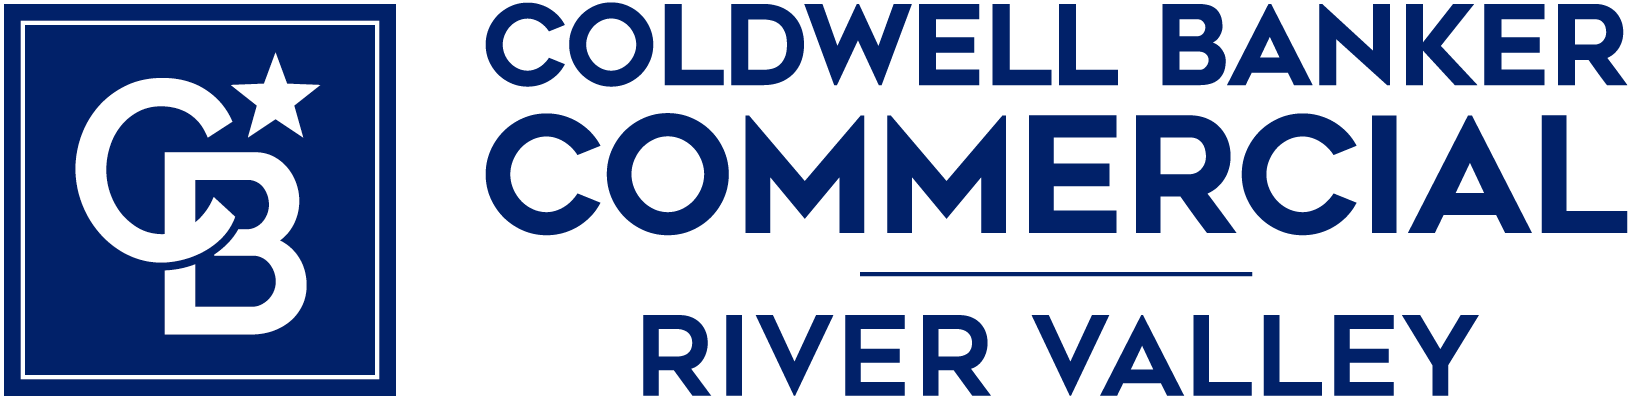 Bruce Kilmer - Coldwell Banker River Valley Commercial Group Logo